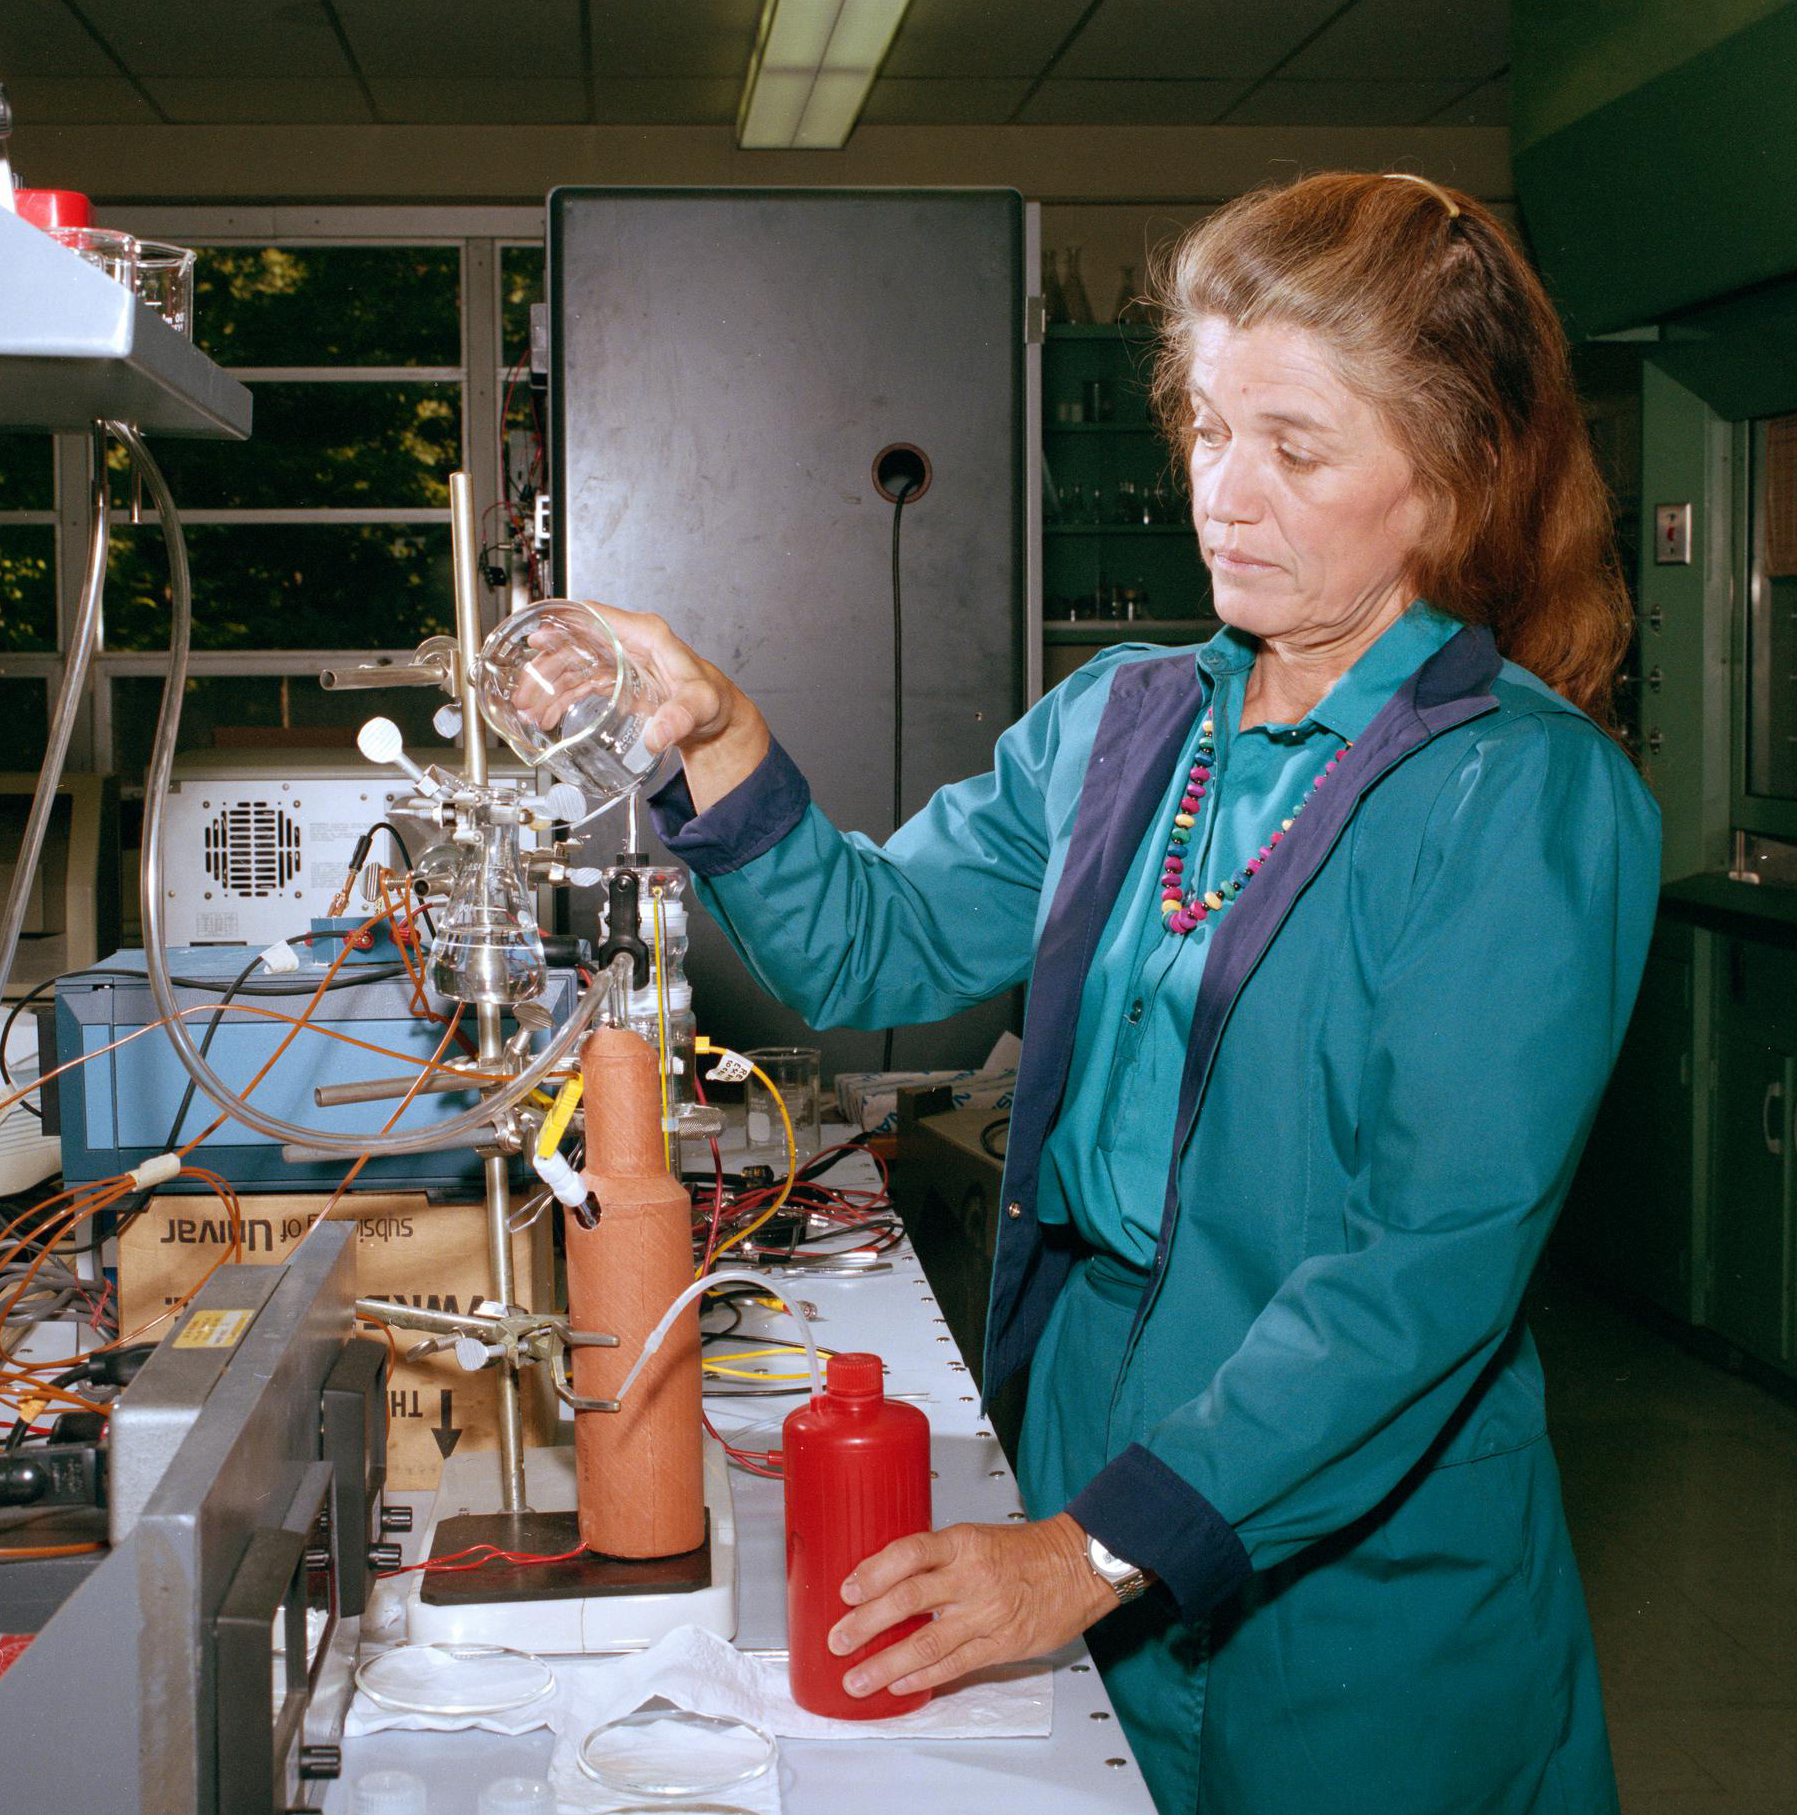 Woman working in laboratory.